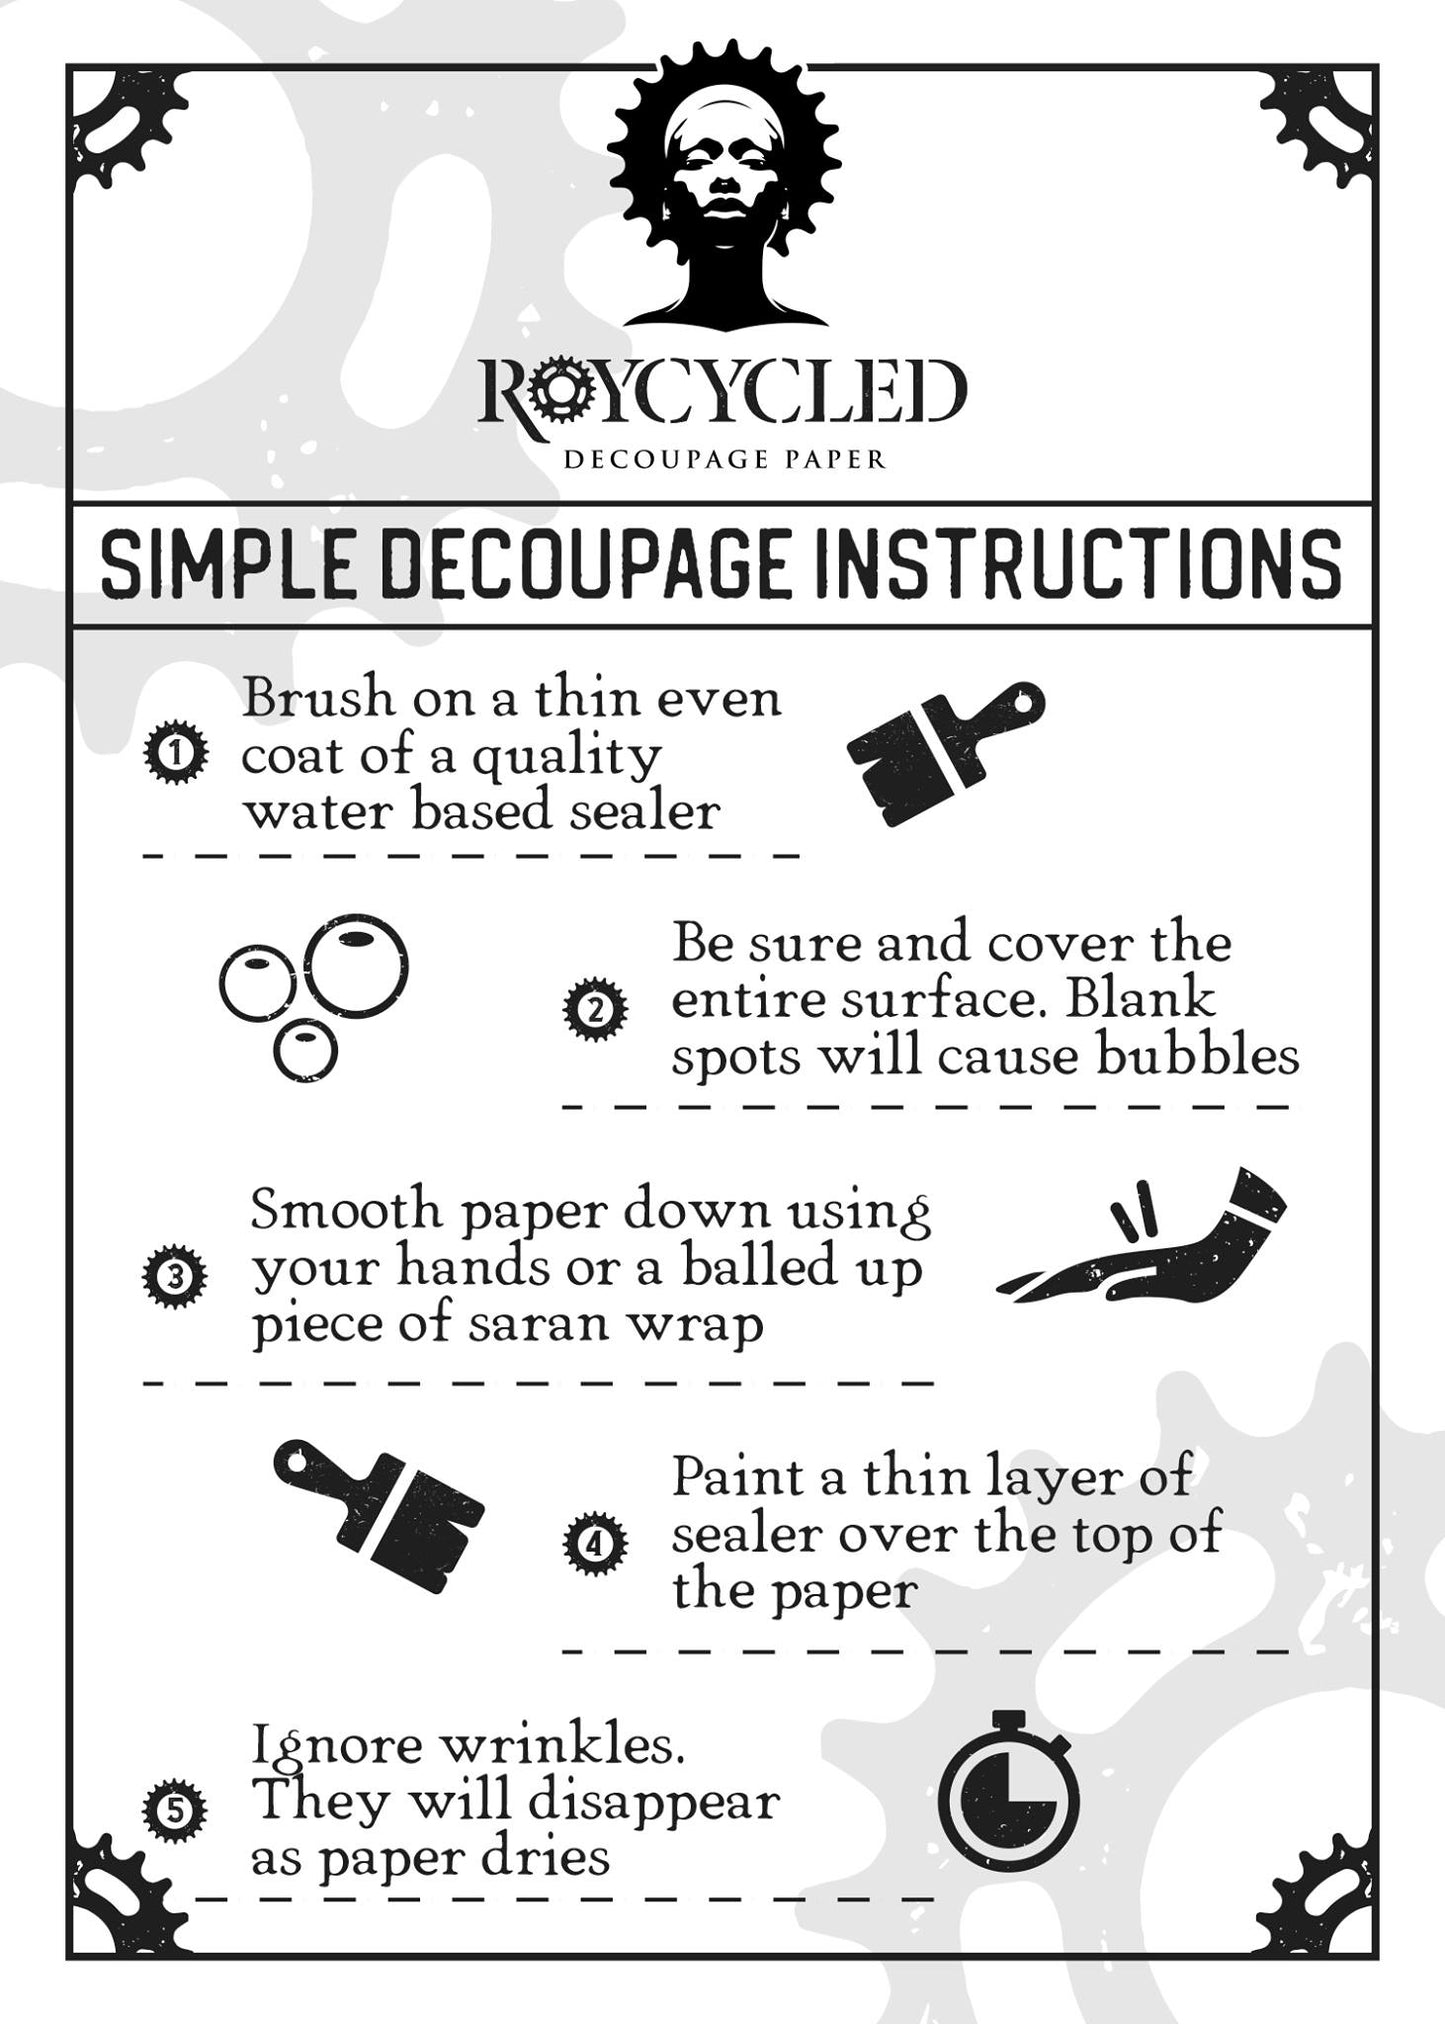 Mingos Decoupage Paper